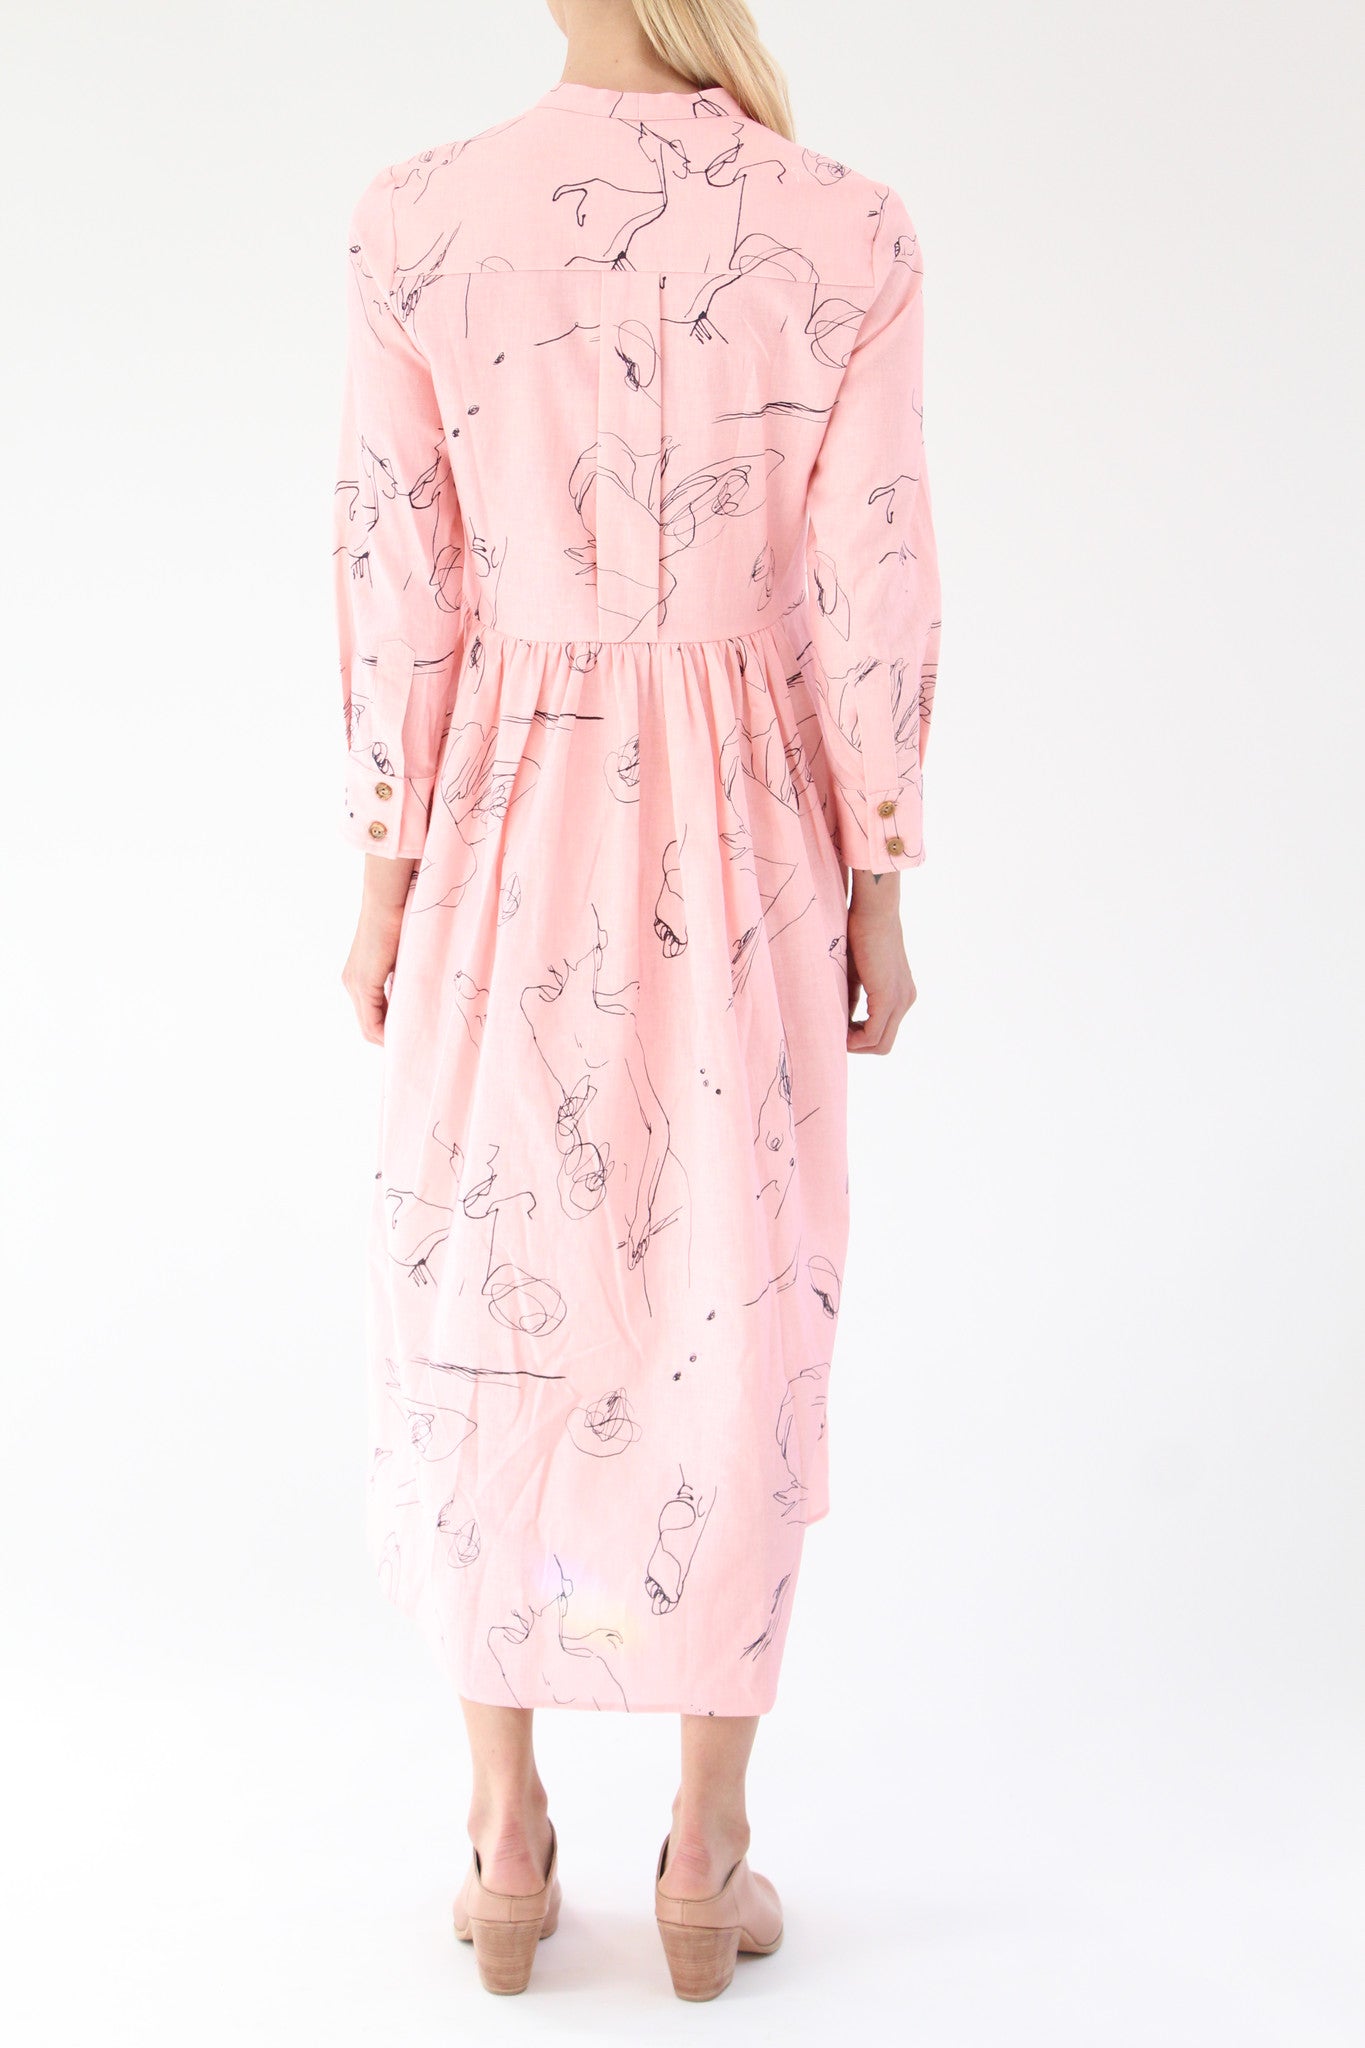 Heinui Nico Dress Pink Scribbles Print At Beklina